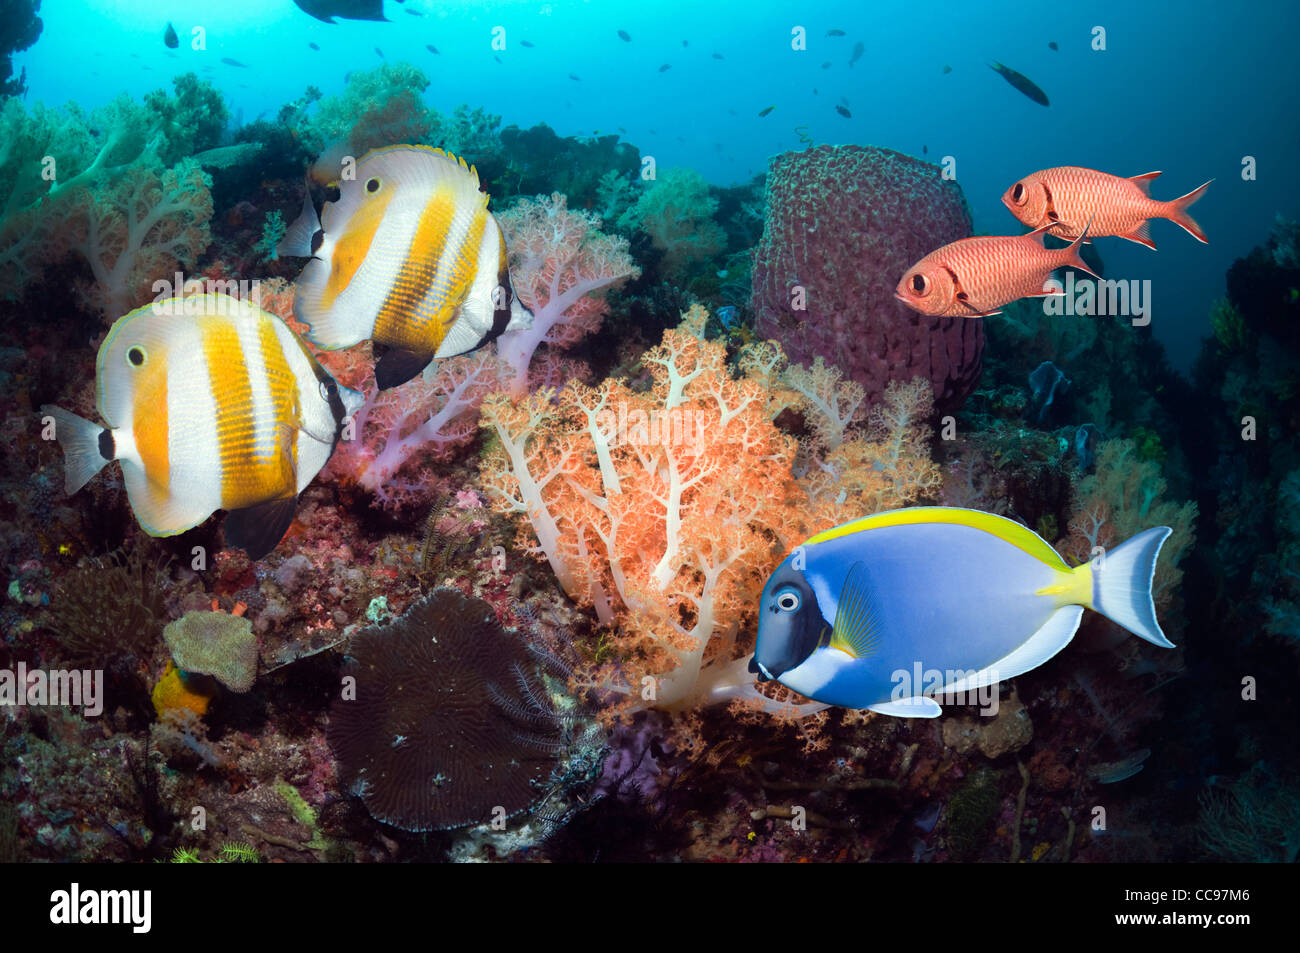 Orange banded coralfish (Coradion chrysozonus), Powderblue surgeonfish (Acanthurus leucosternon) swimming over coral reef. Stock Photo